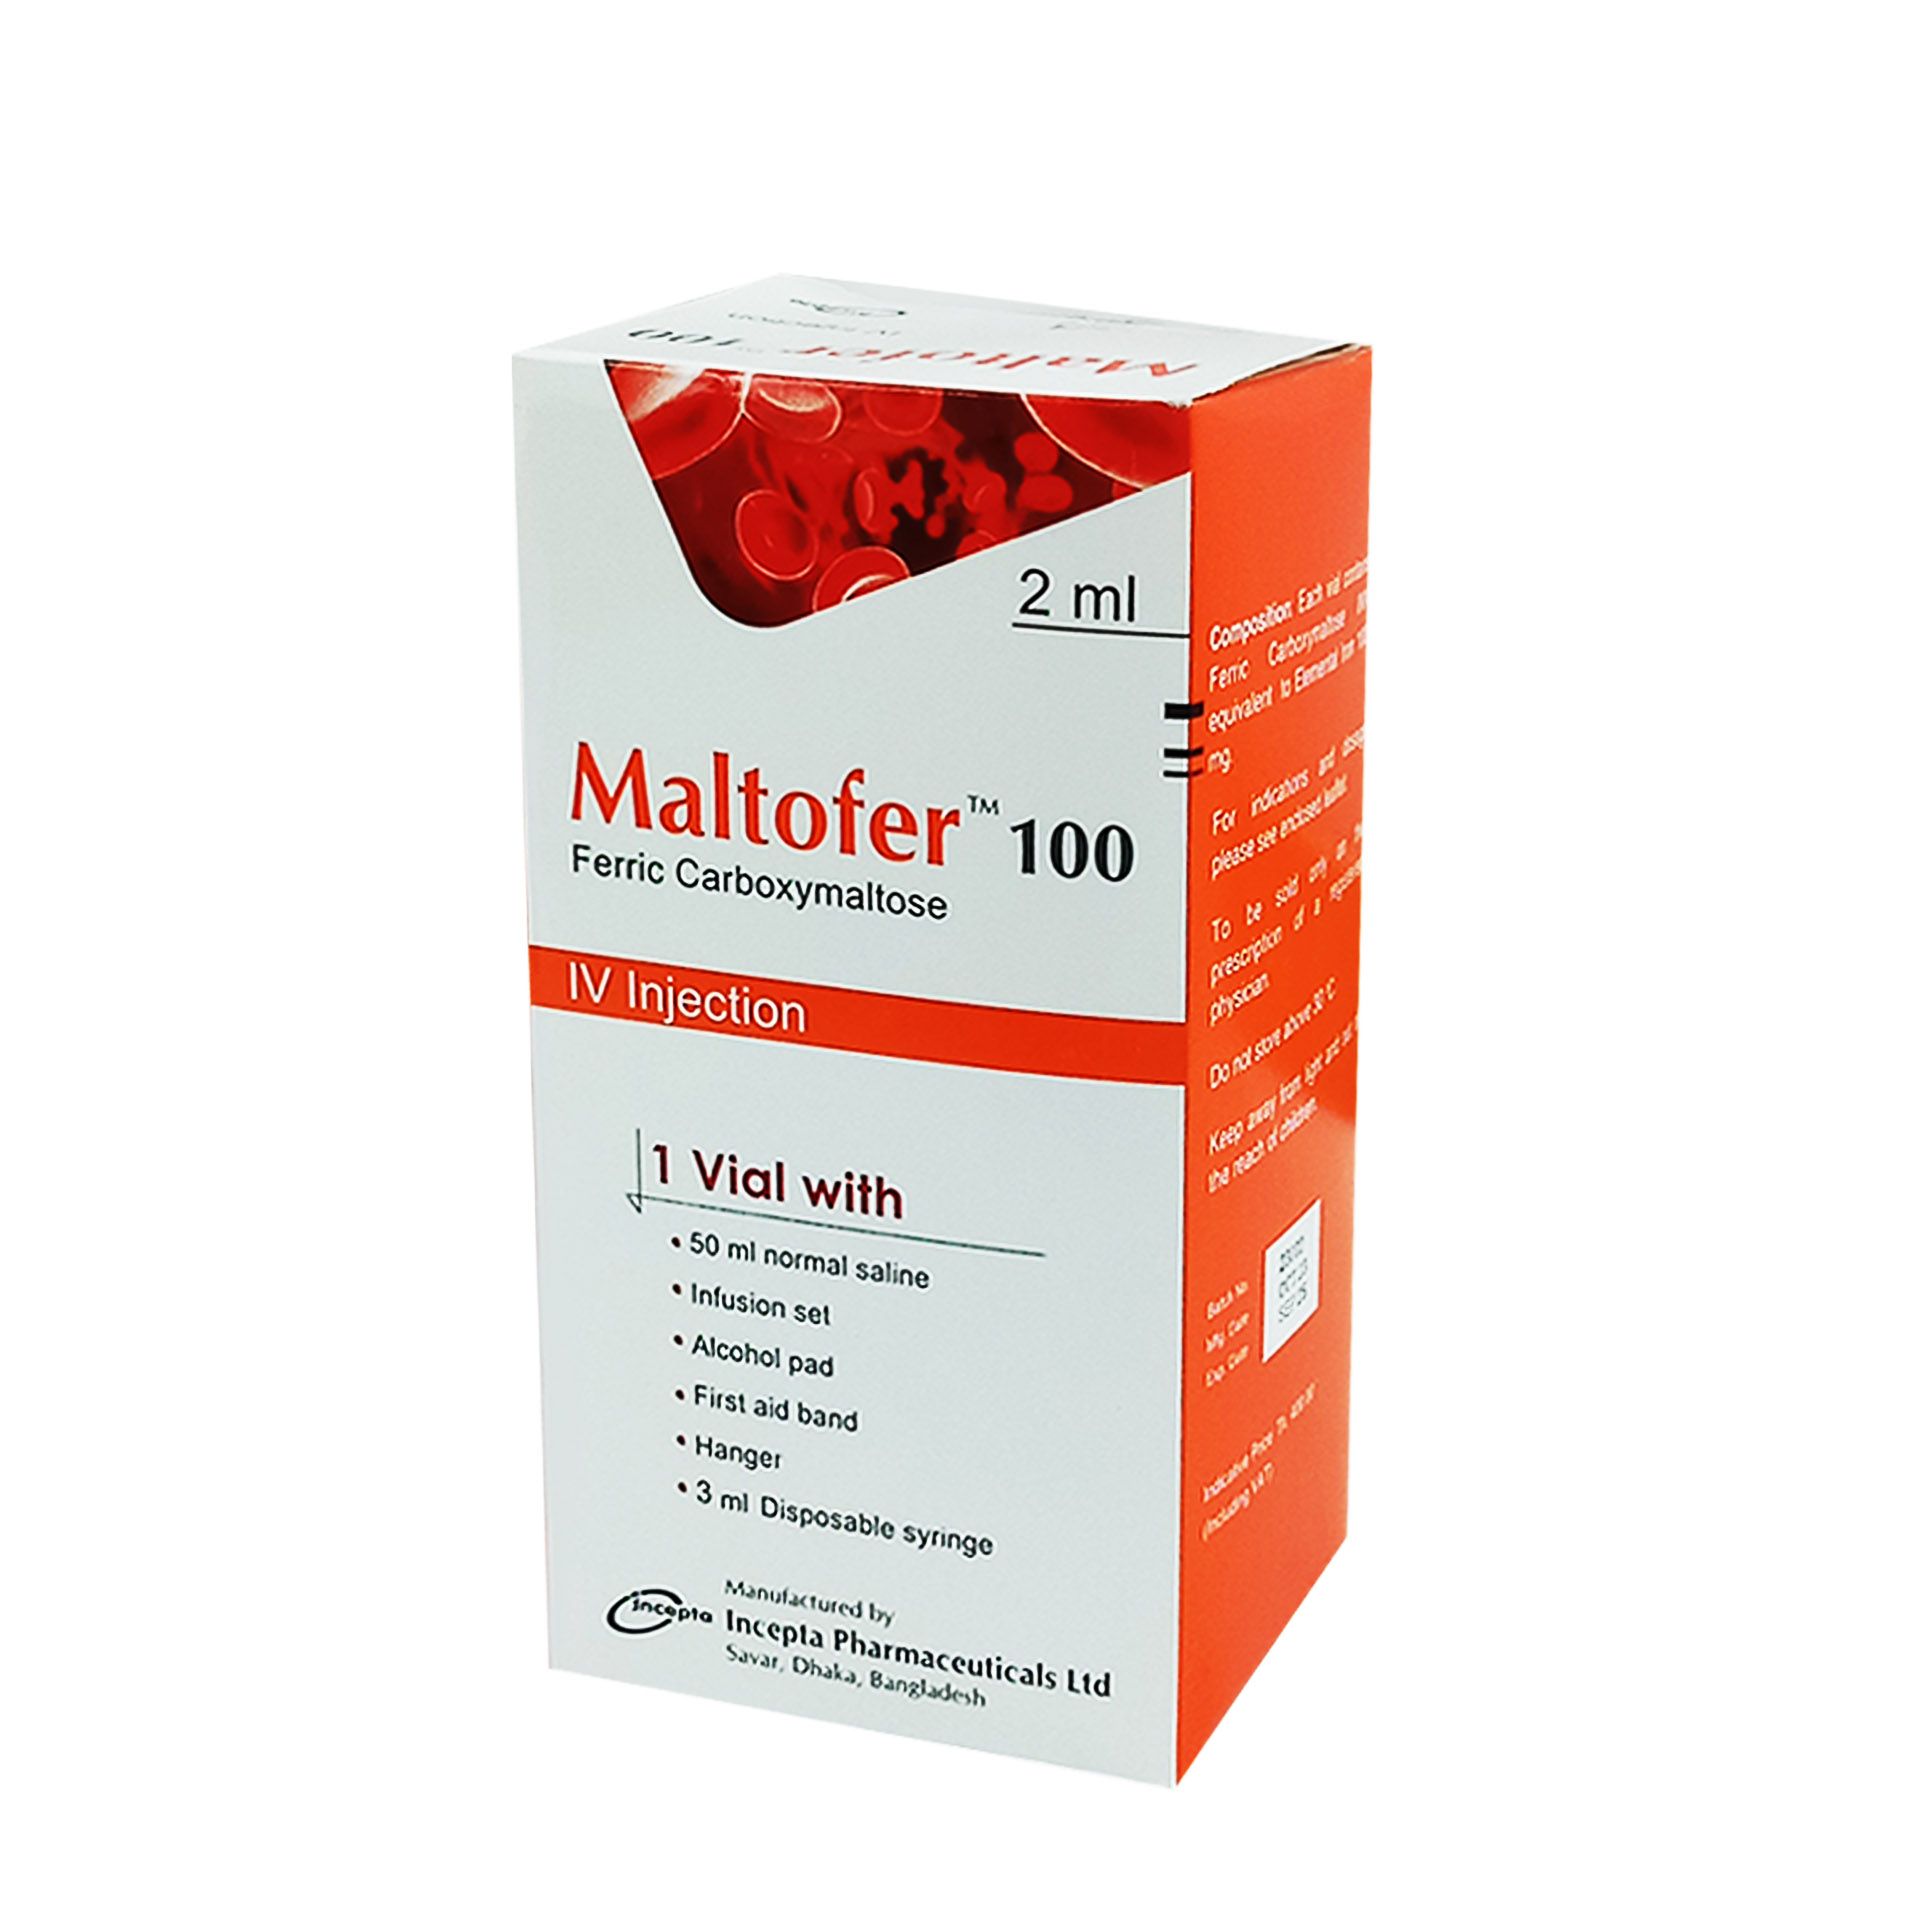 Maltofer 100mg/2ml Injection